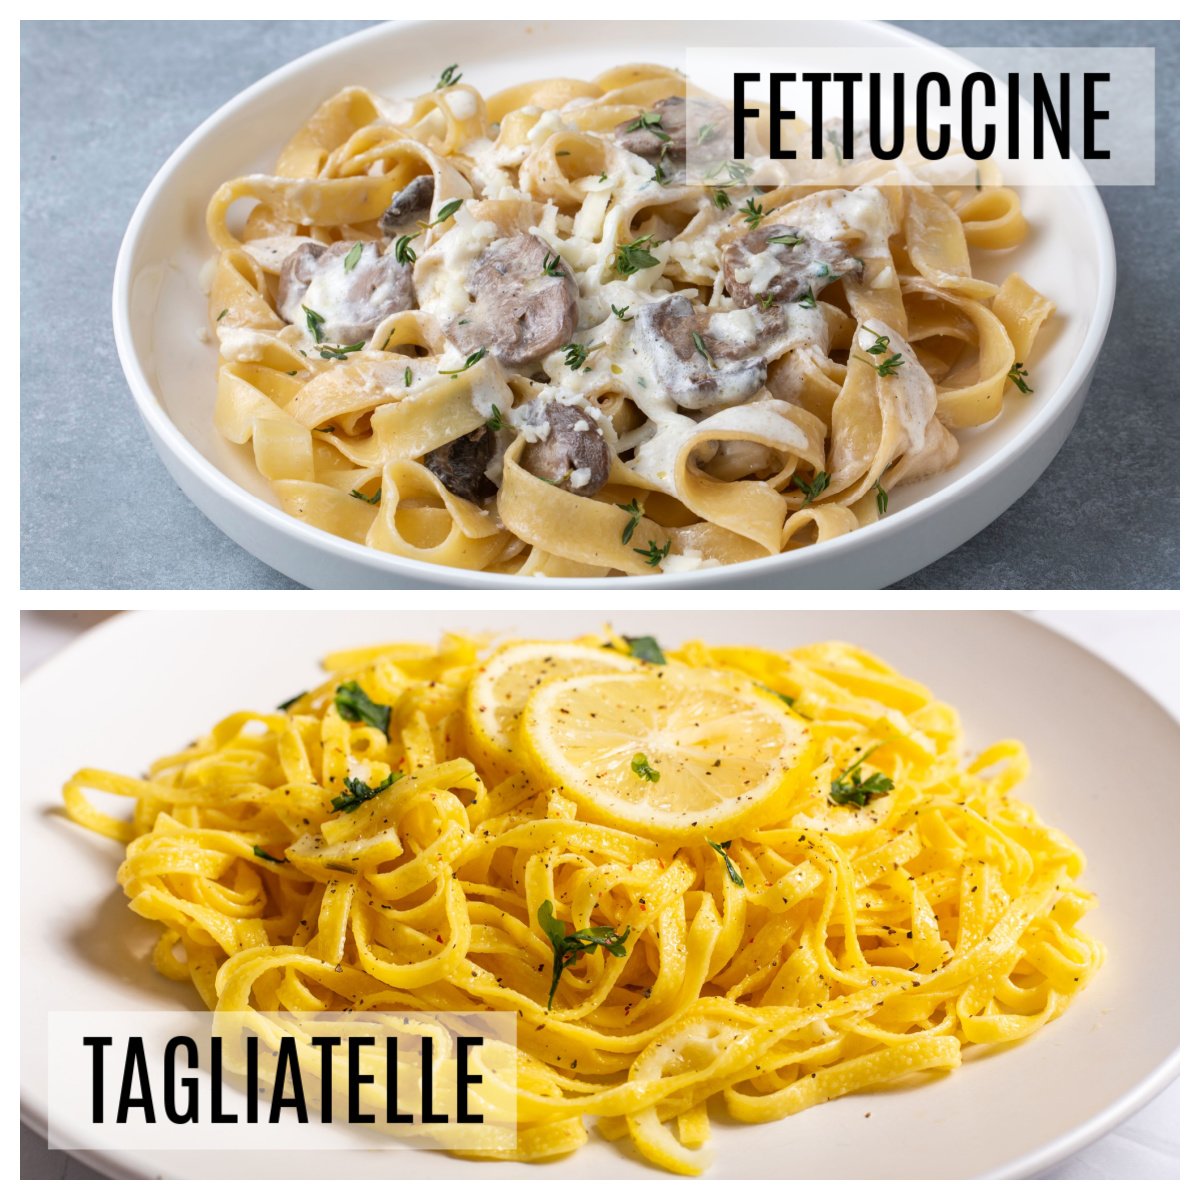 fettuccine versus tagliatelle pasta differences